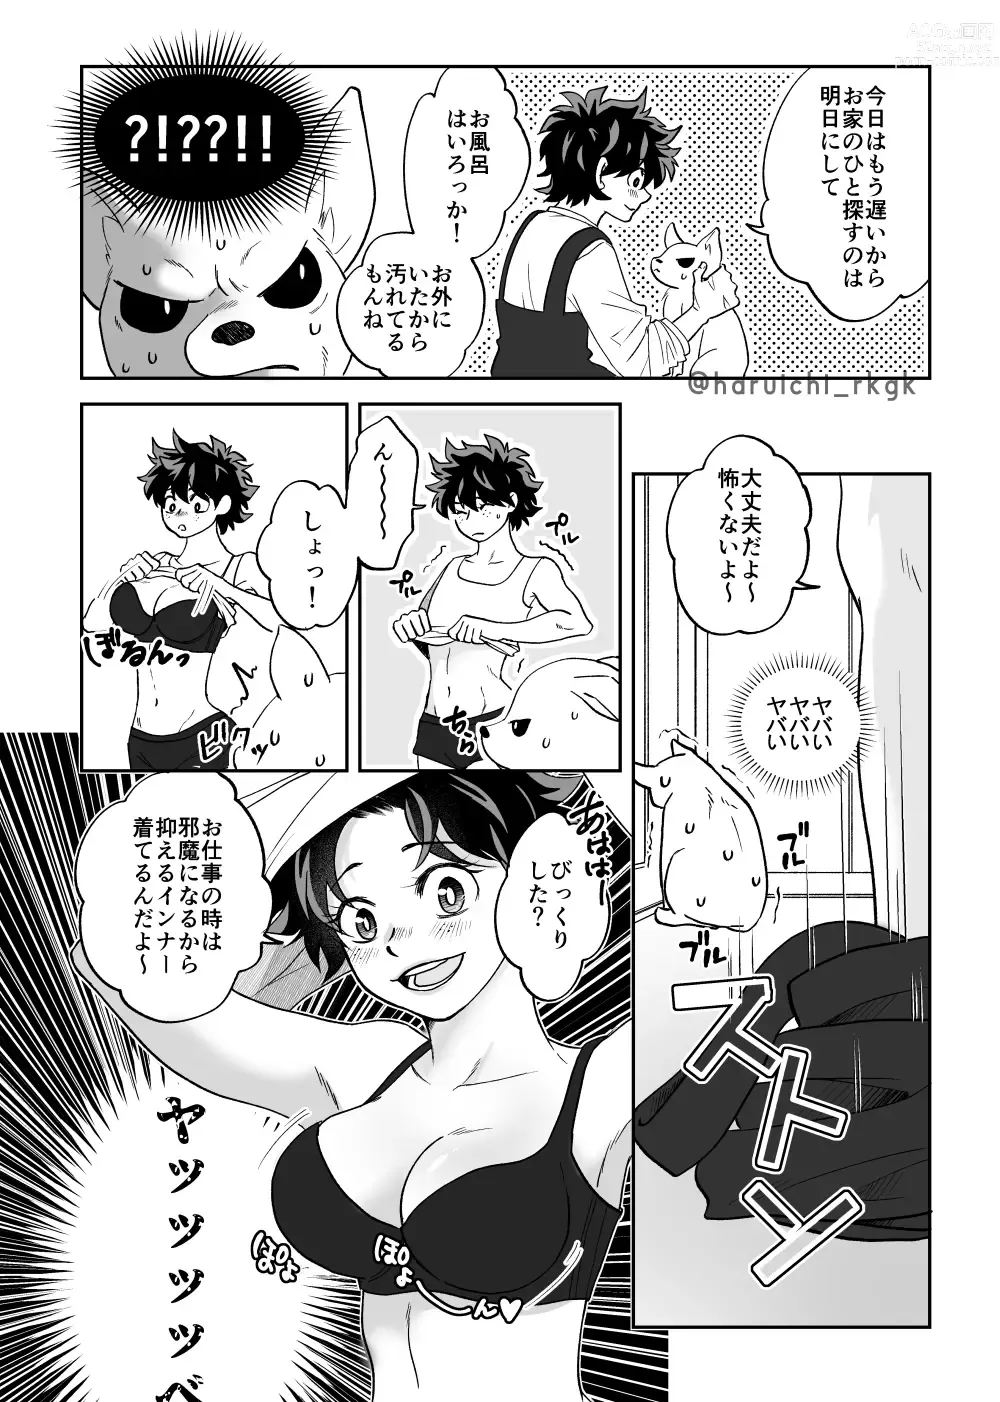 Page 21 of doujinshi KatsuDe R18 Matome